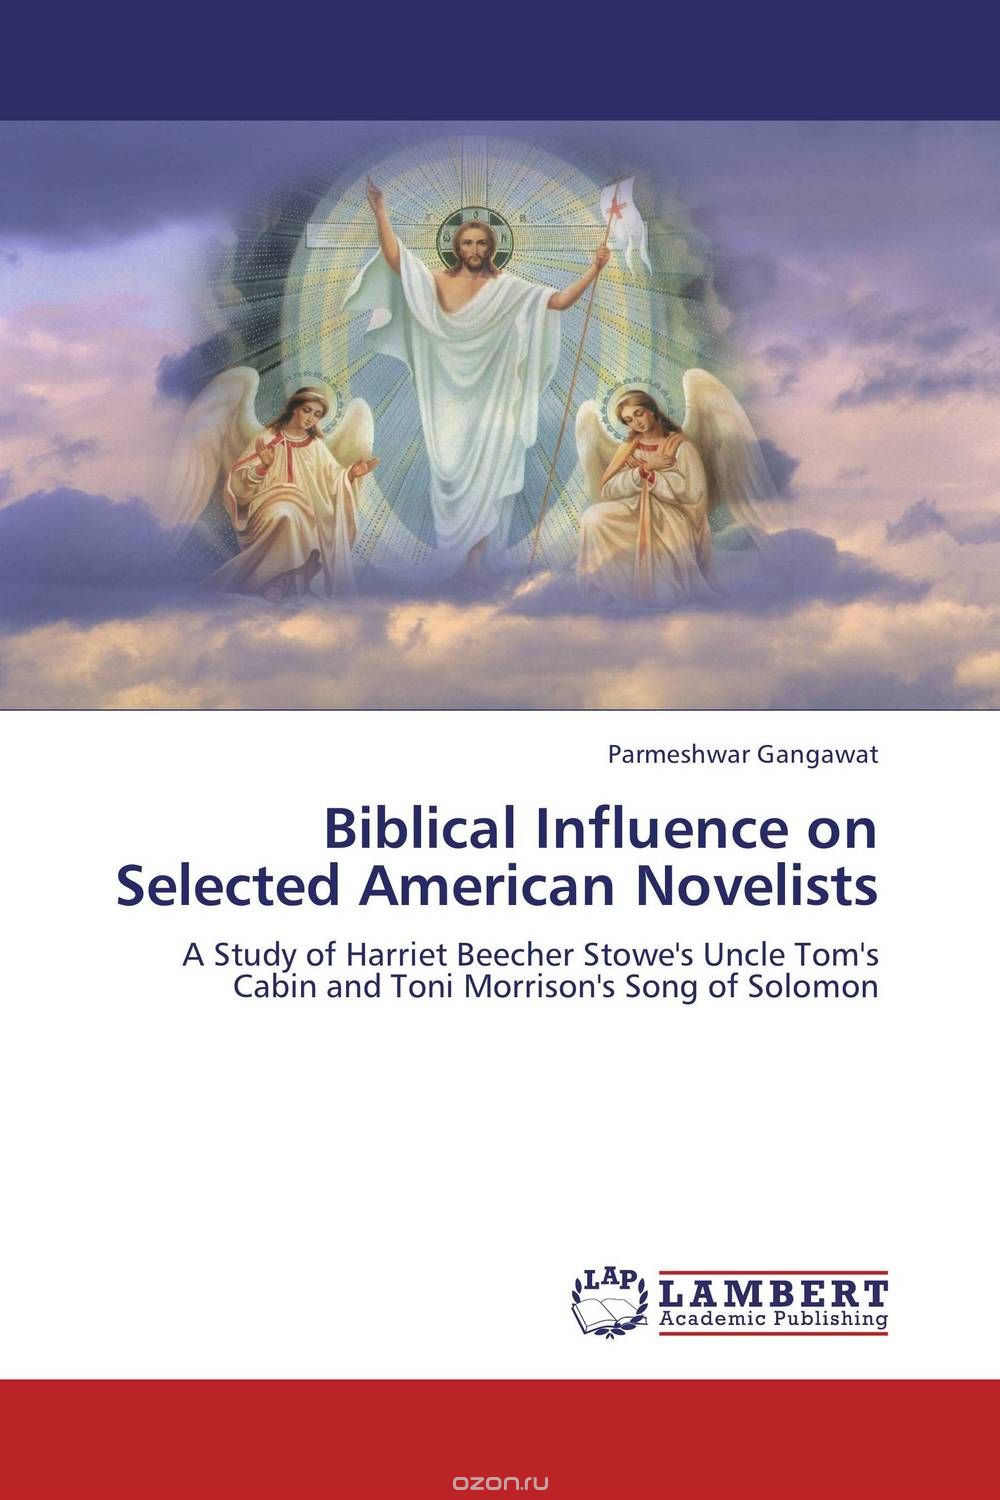 Скачать книгу "Biblical Influence on Selected American Novelists"